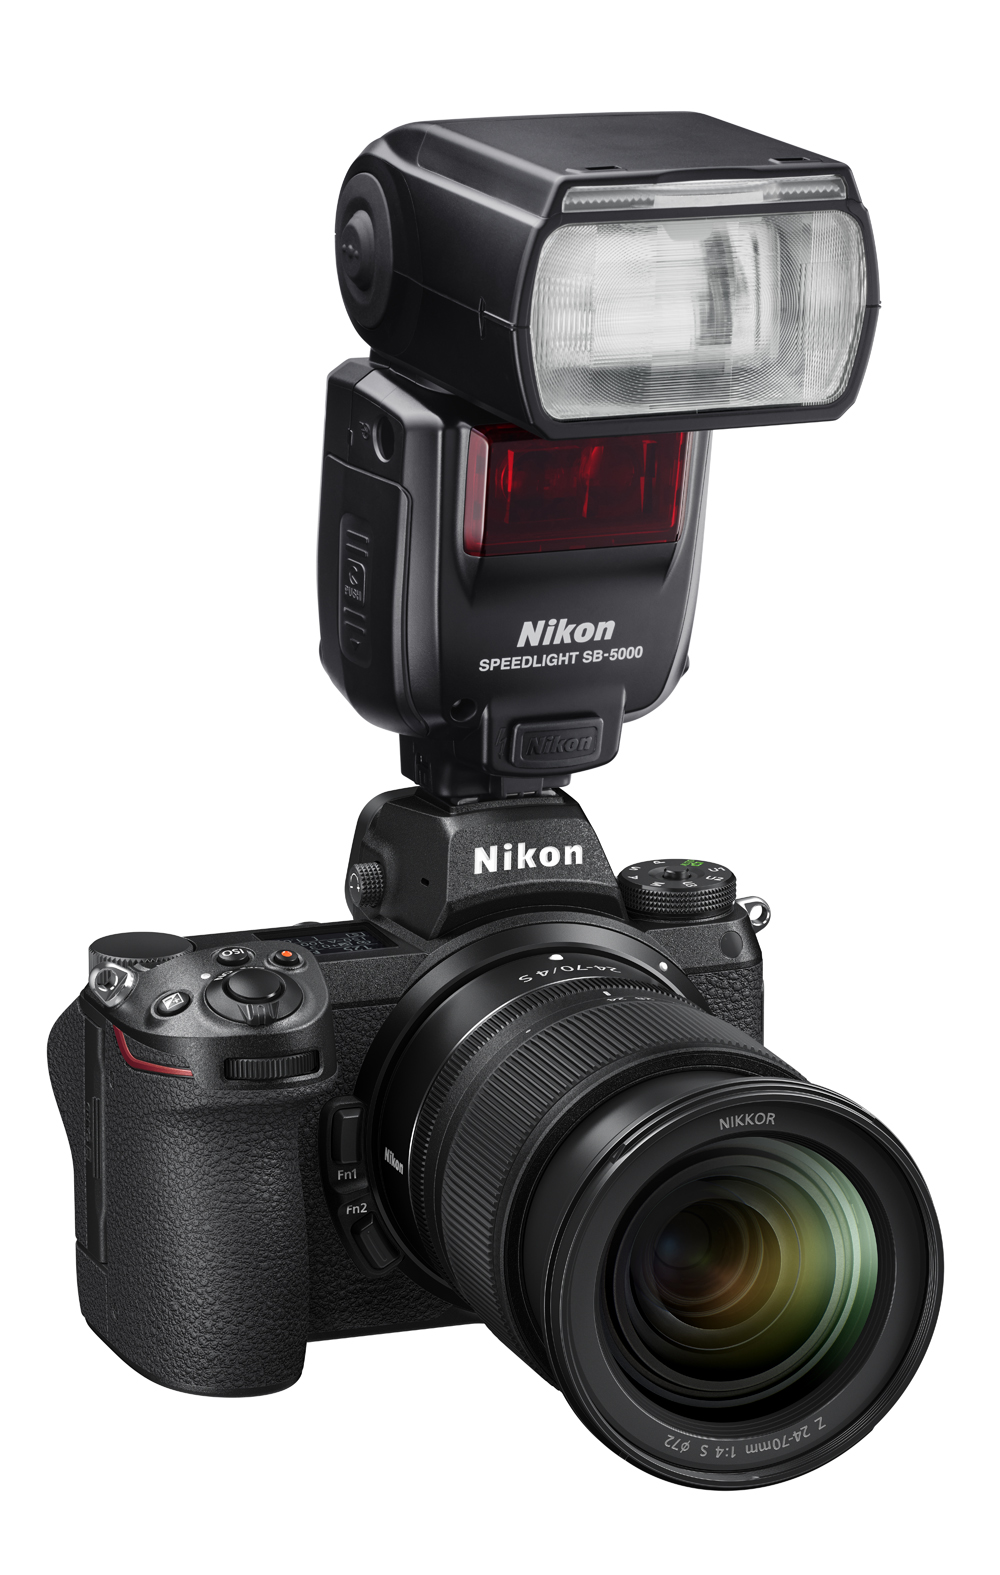 Nikon Z7II with the Nikon Speedlight SB-5000 flash.